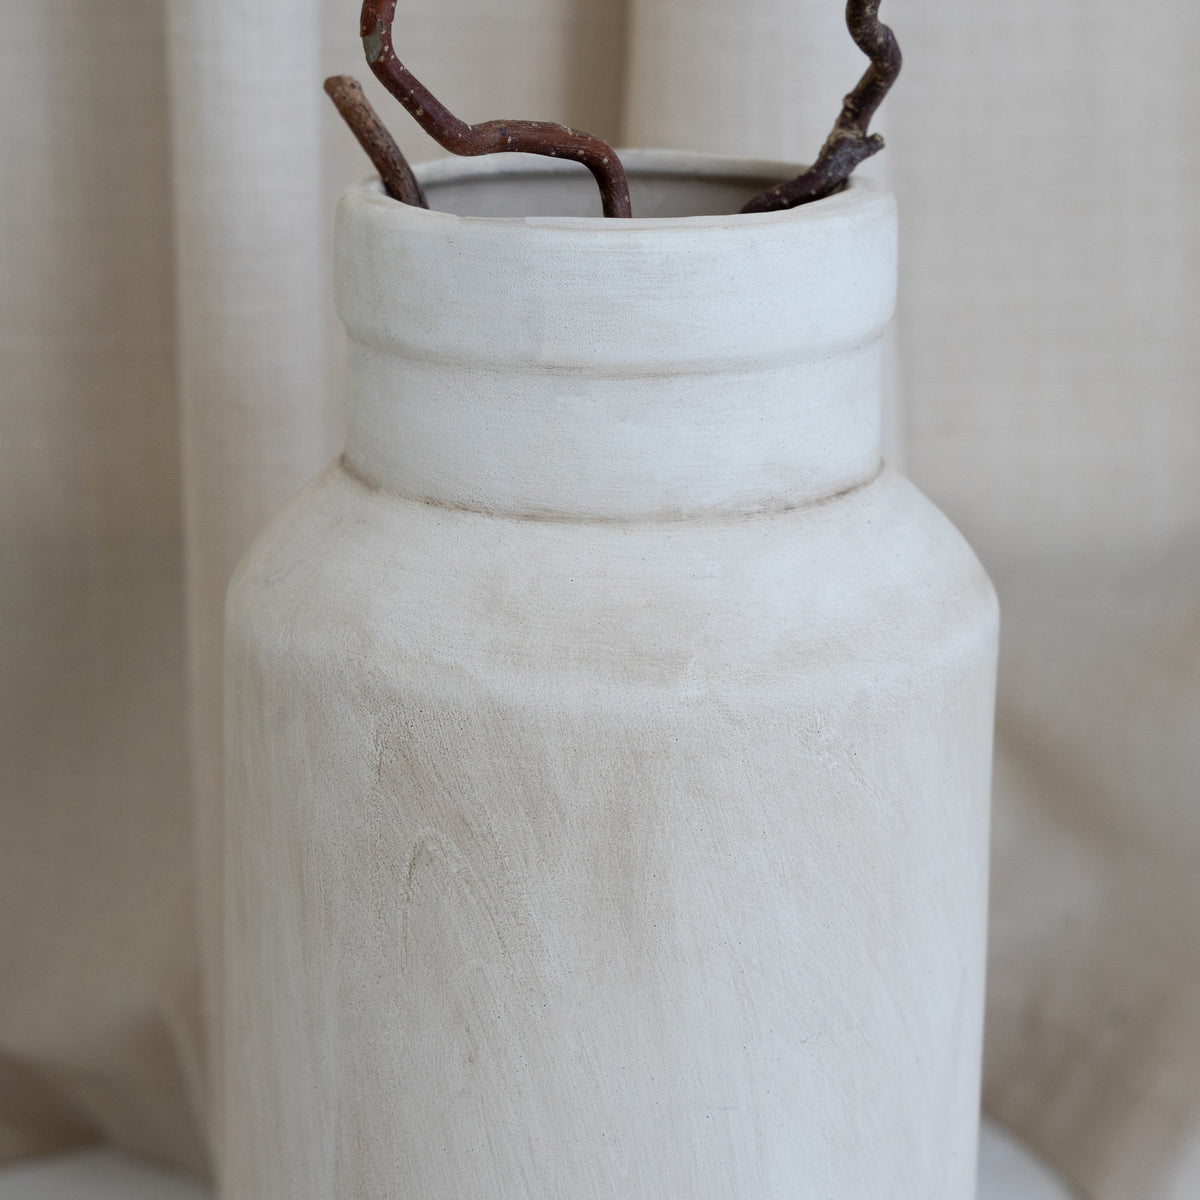 Beige textured ceramic large vase detail shot